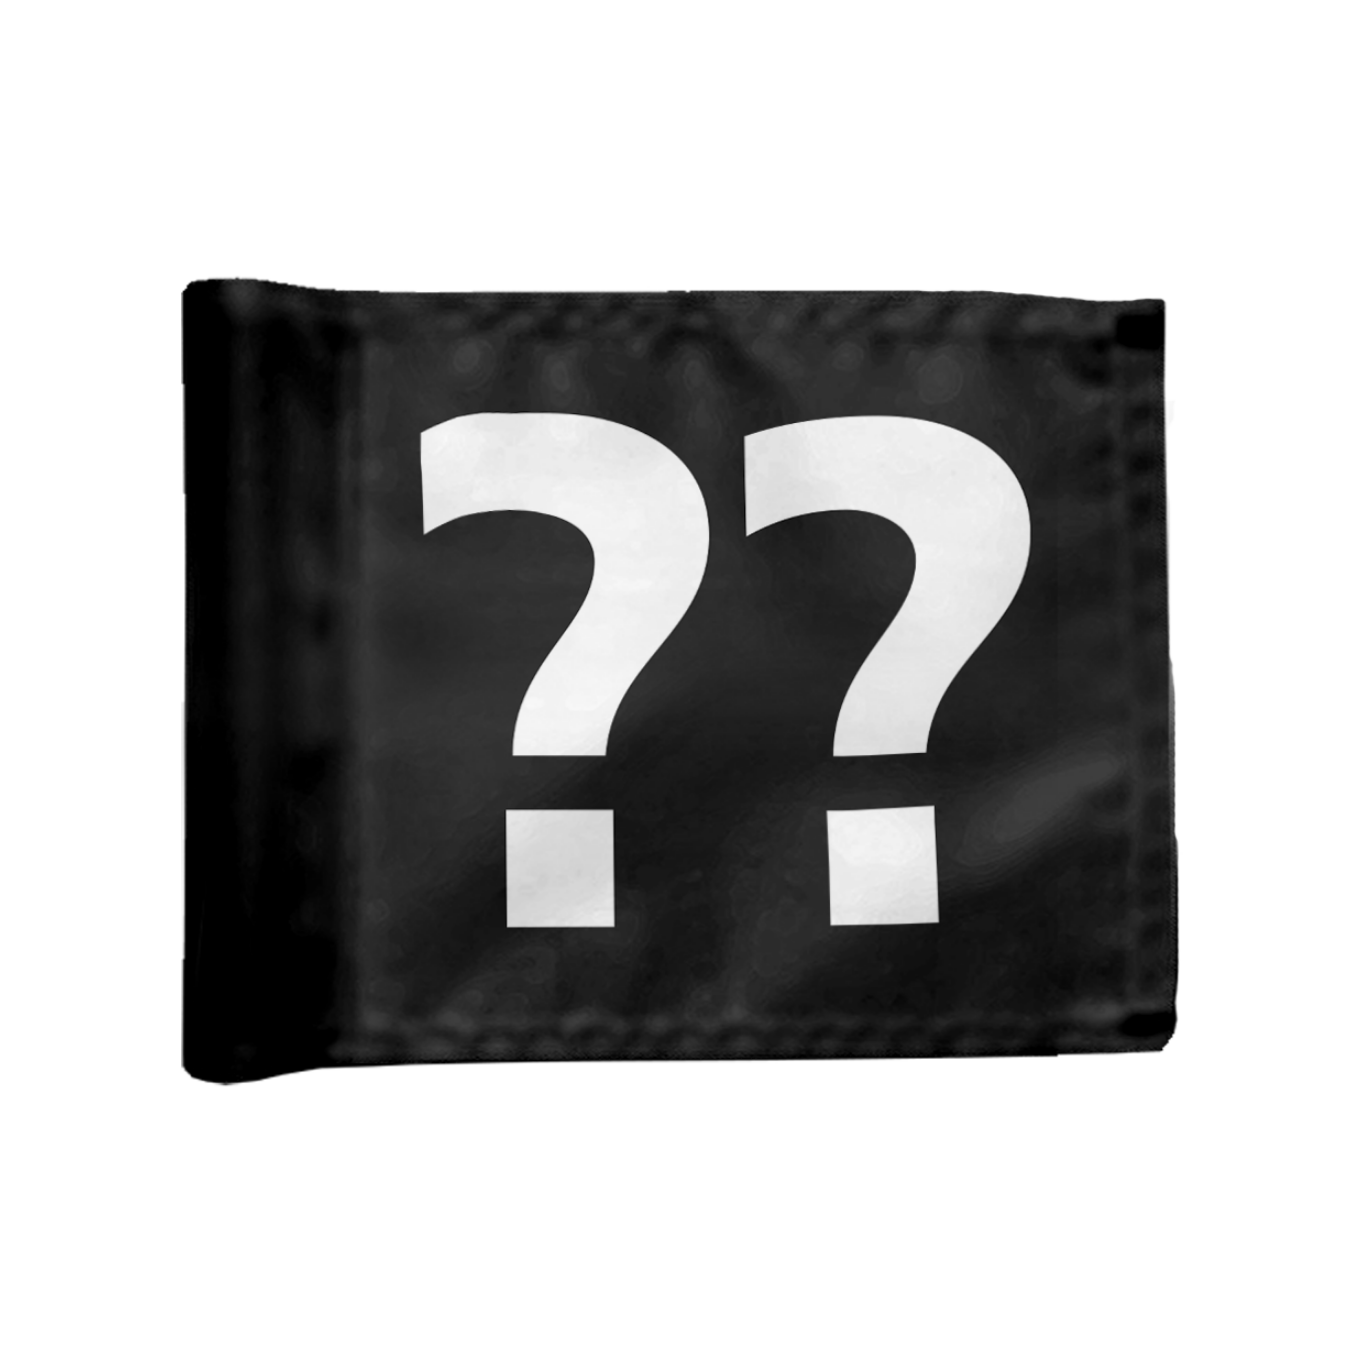 Styckvis Adventure Golf flagga i svart med valfritt hålnummer, 200 gram flaggduk